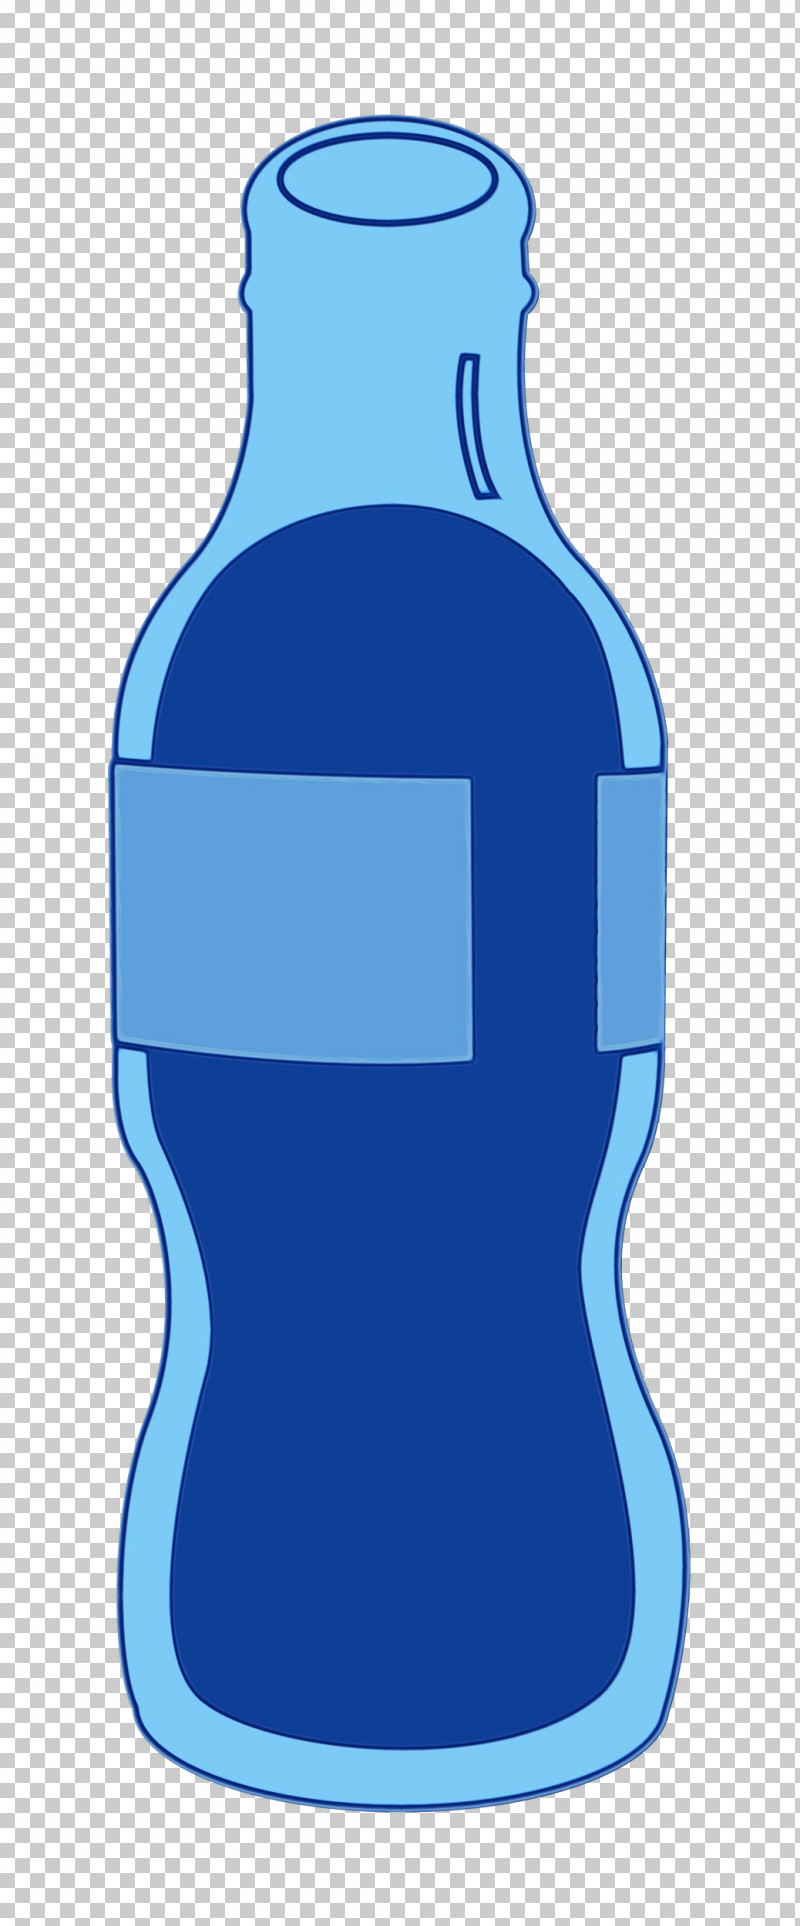 Glass Bottle Bottle Water Bottle Cobalt Blue Glass PNG, Clipart, Blue, Bottle, Cobalt Blue, Drink Element, Glass Free PNG Download